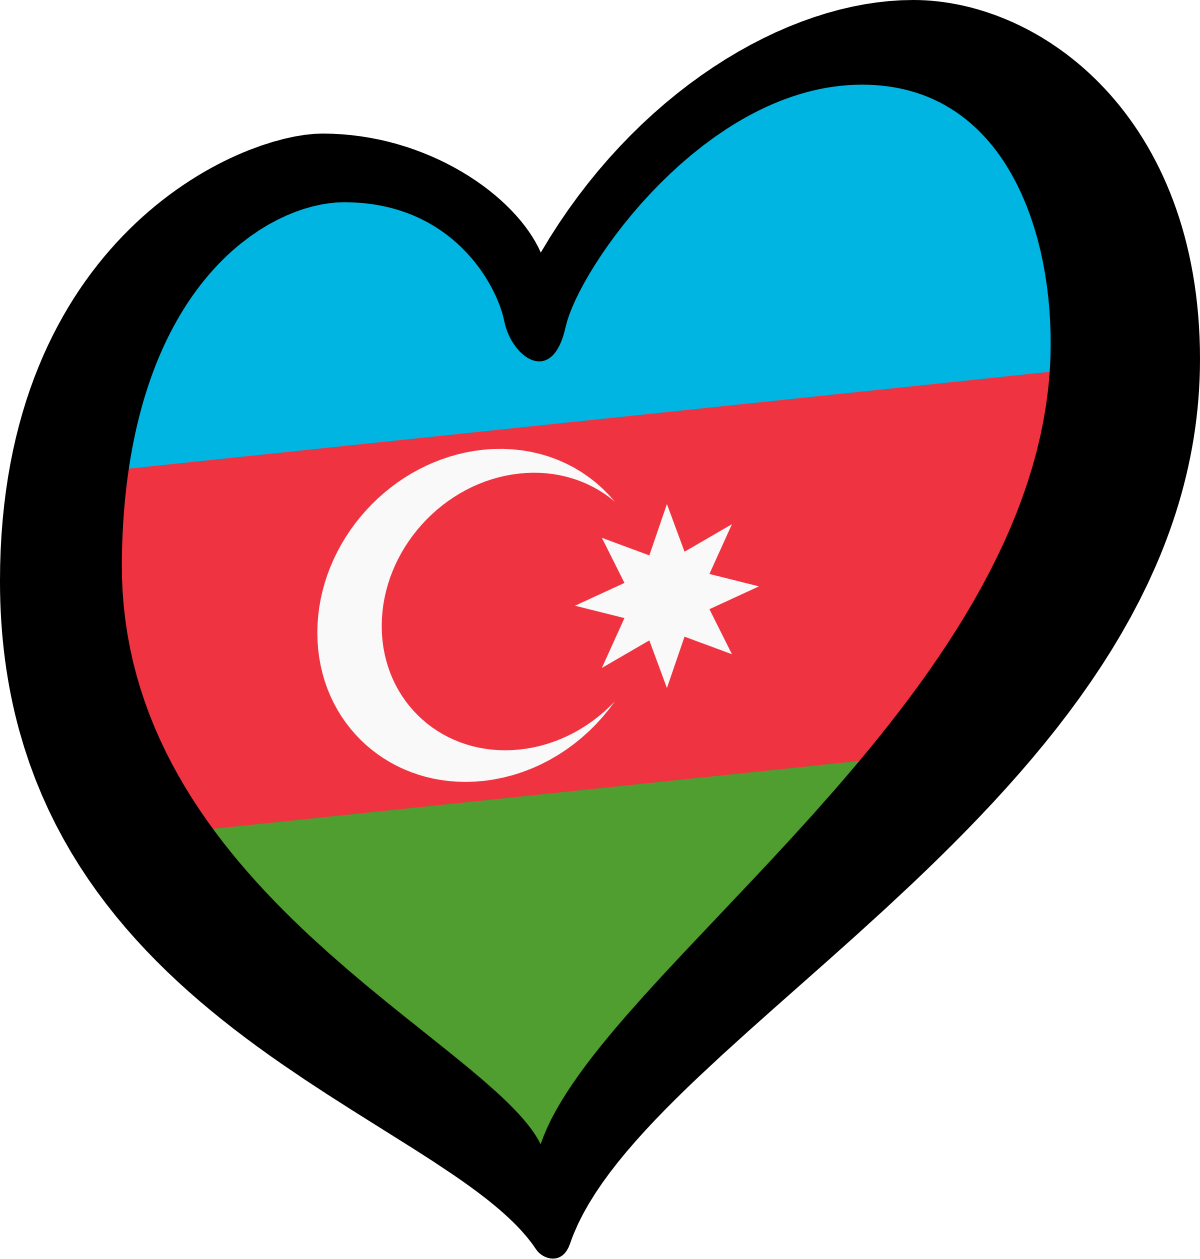 Azerbajdzjan i Eurovision Song Contest 2017 - Wikipedia